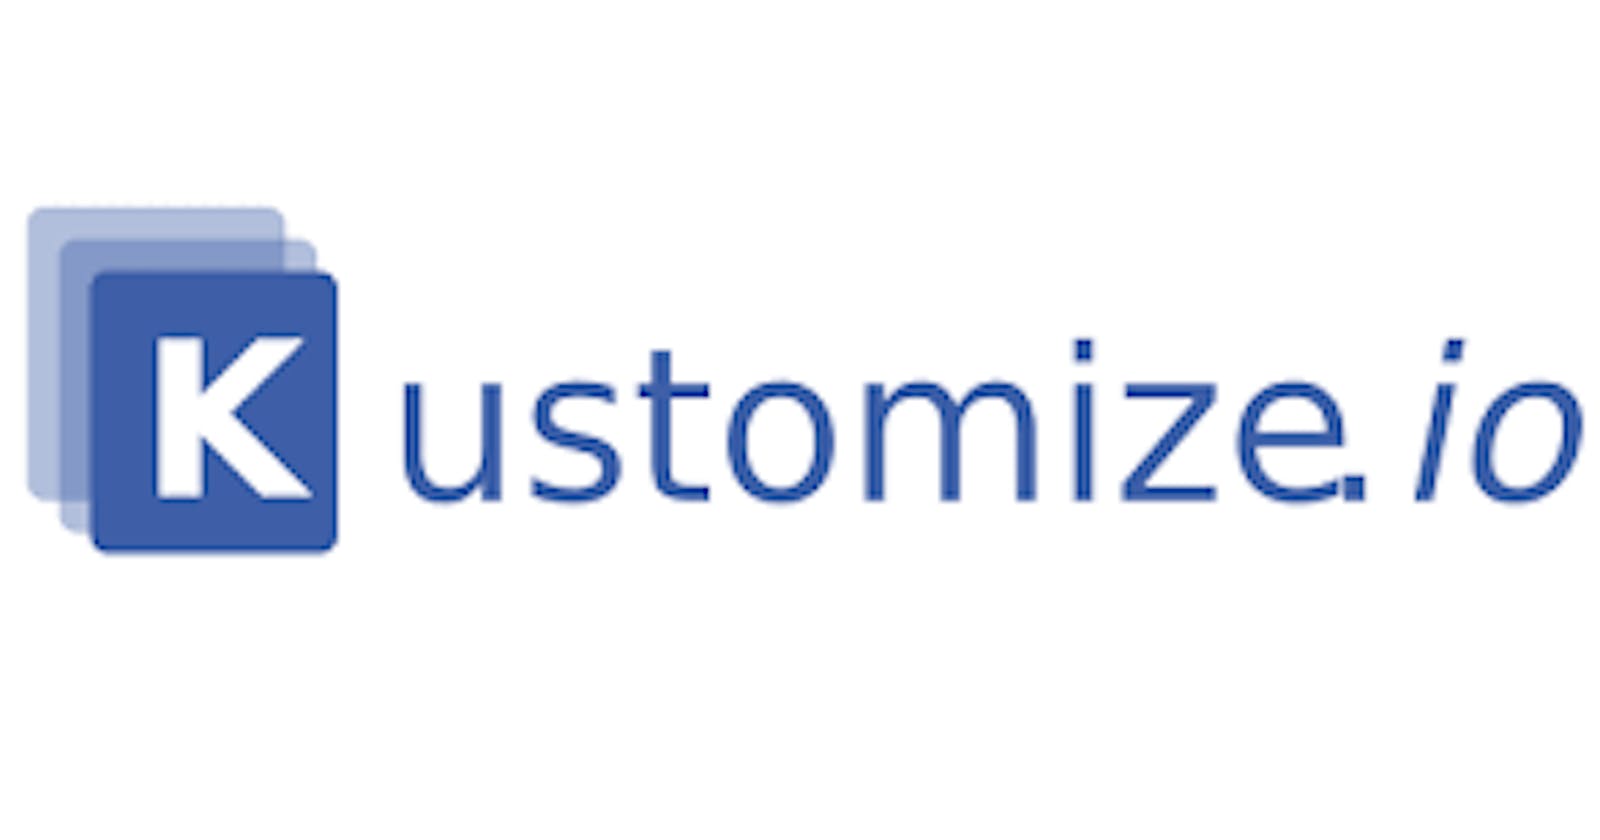 Introduction Kubernetes and Kustomize: How to easily customize any resource configuration with Kustomize?